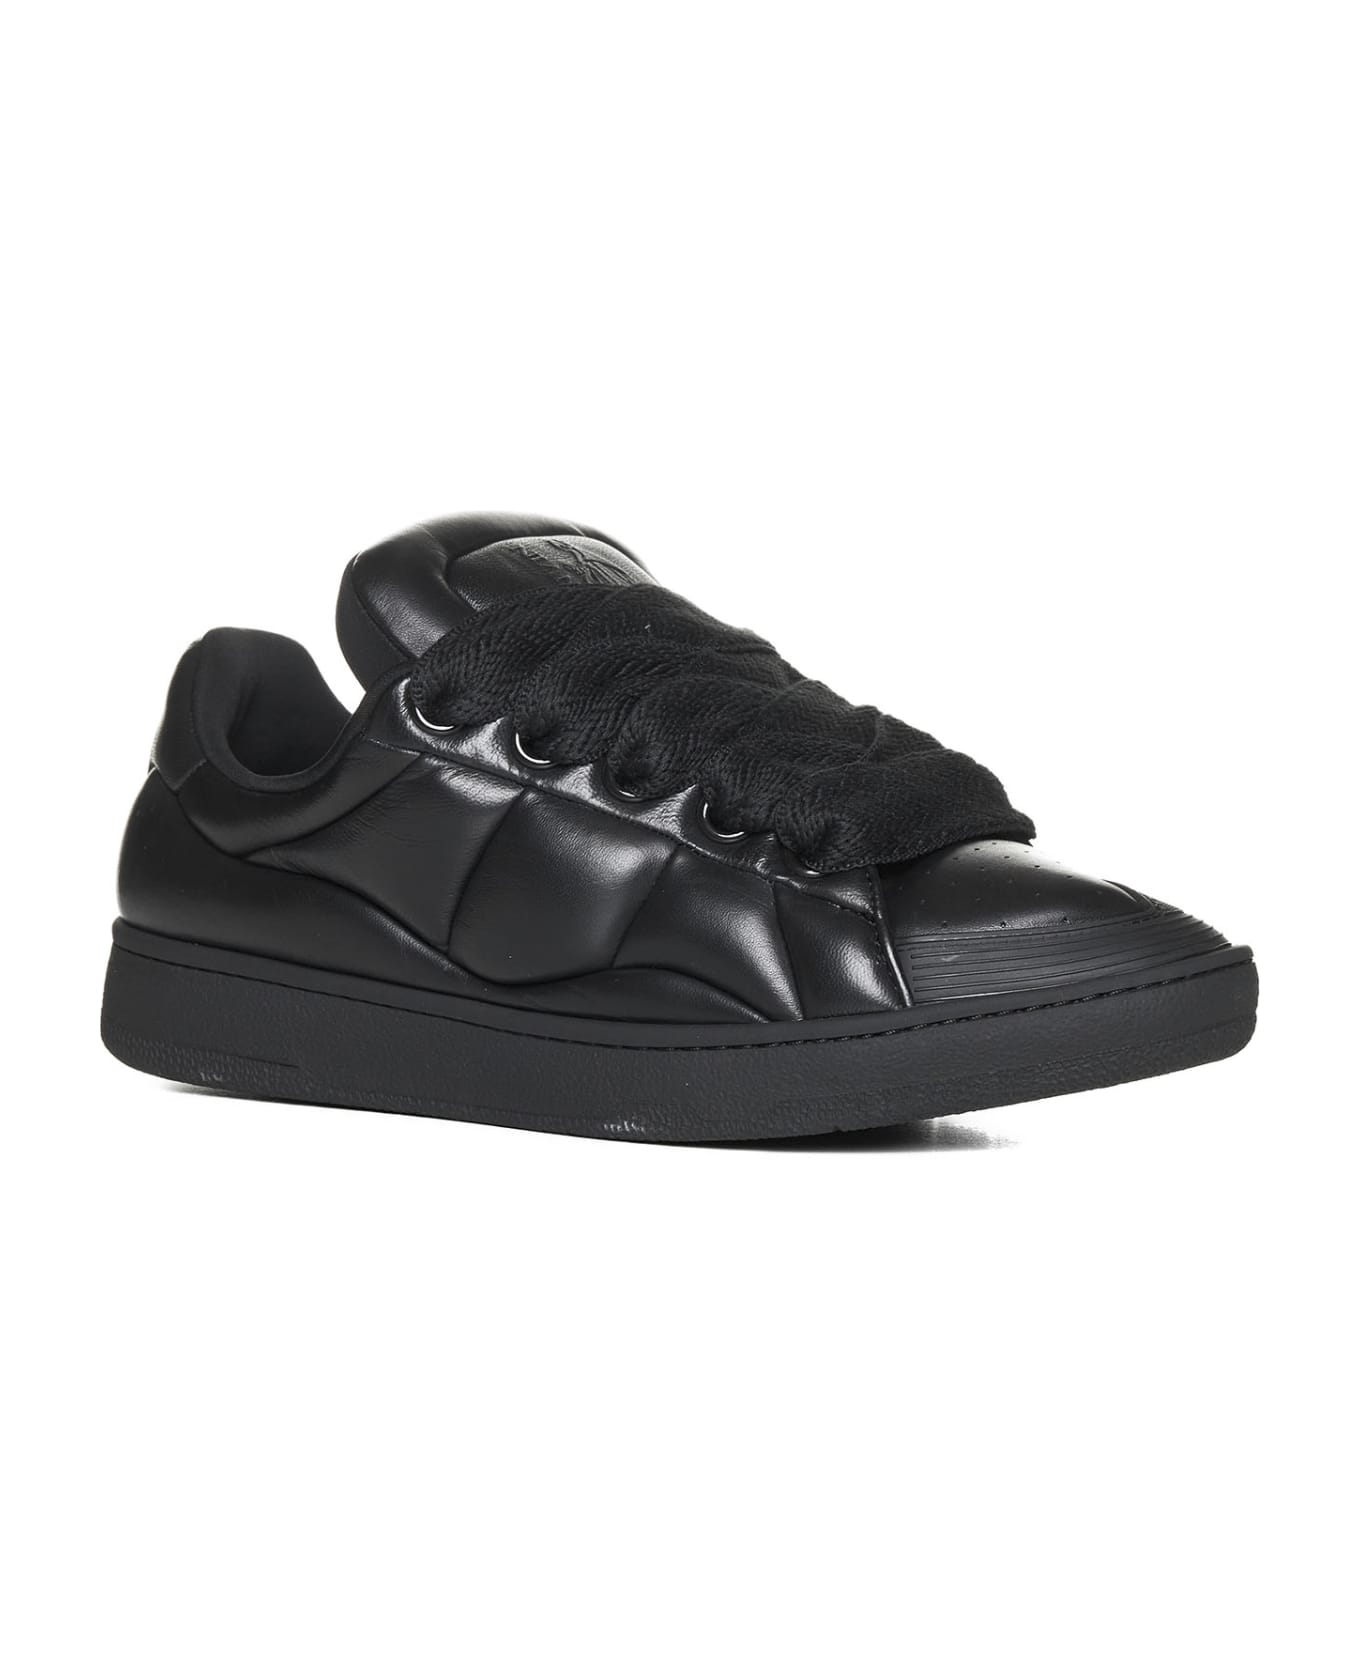 Lanvin Sneakers - Black/black